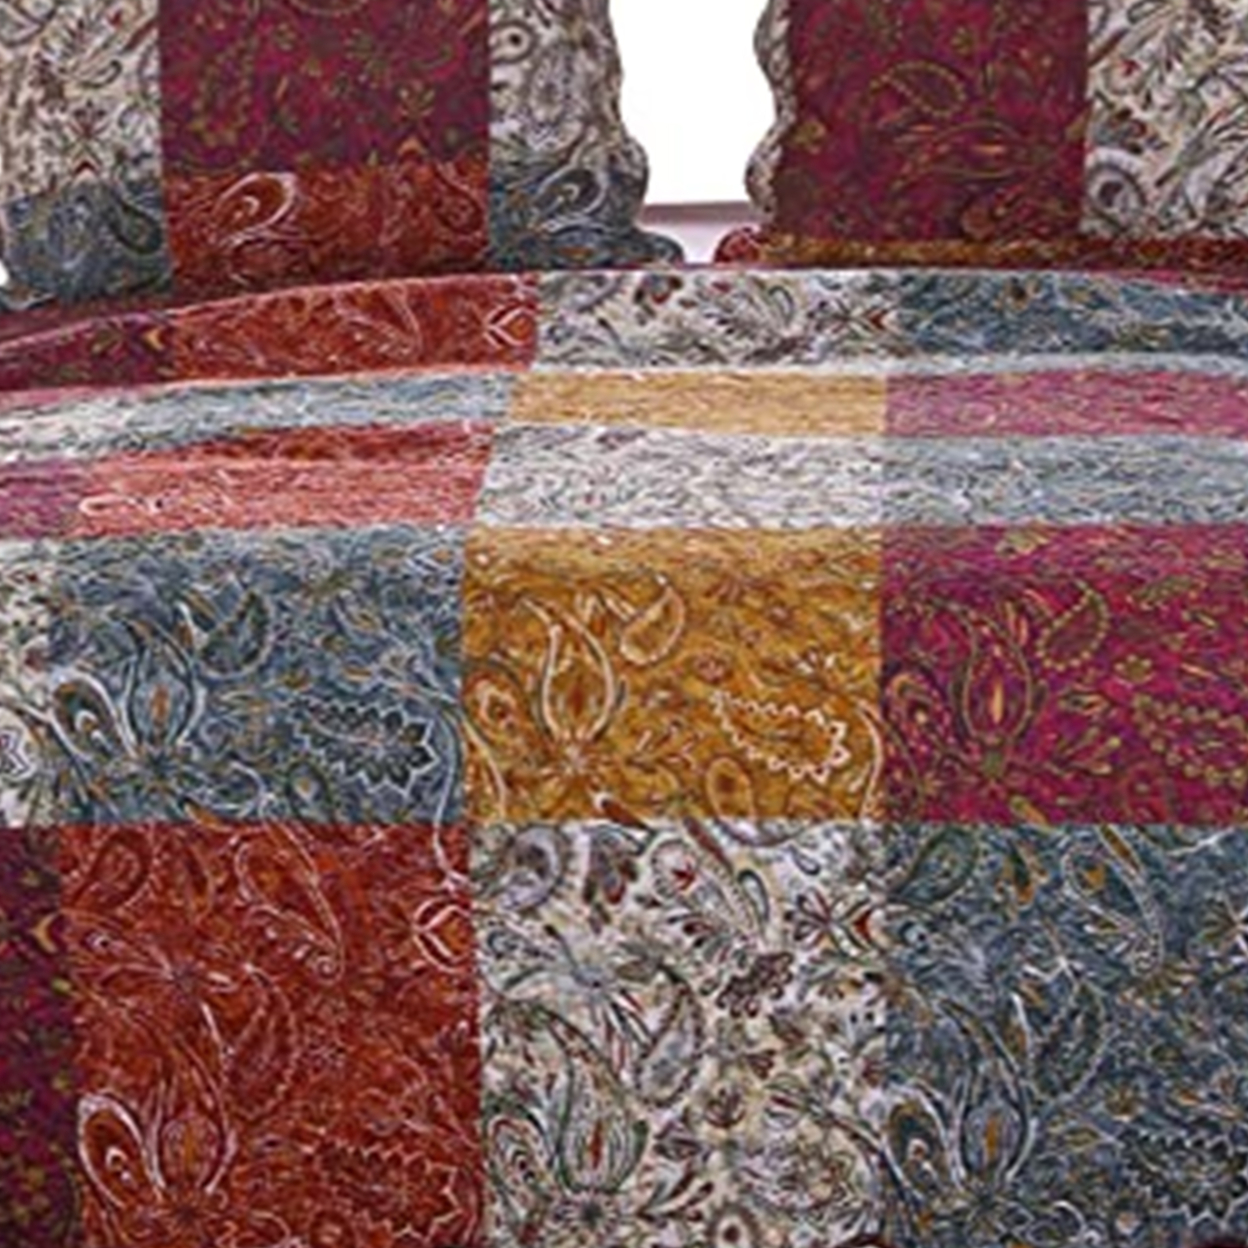 3 Piece Cotton King Size Quilt Set With Paisley Print, Multicolor- Saltoro Sherpi